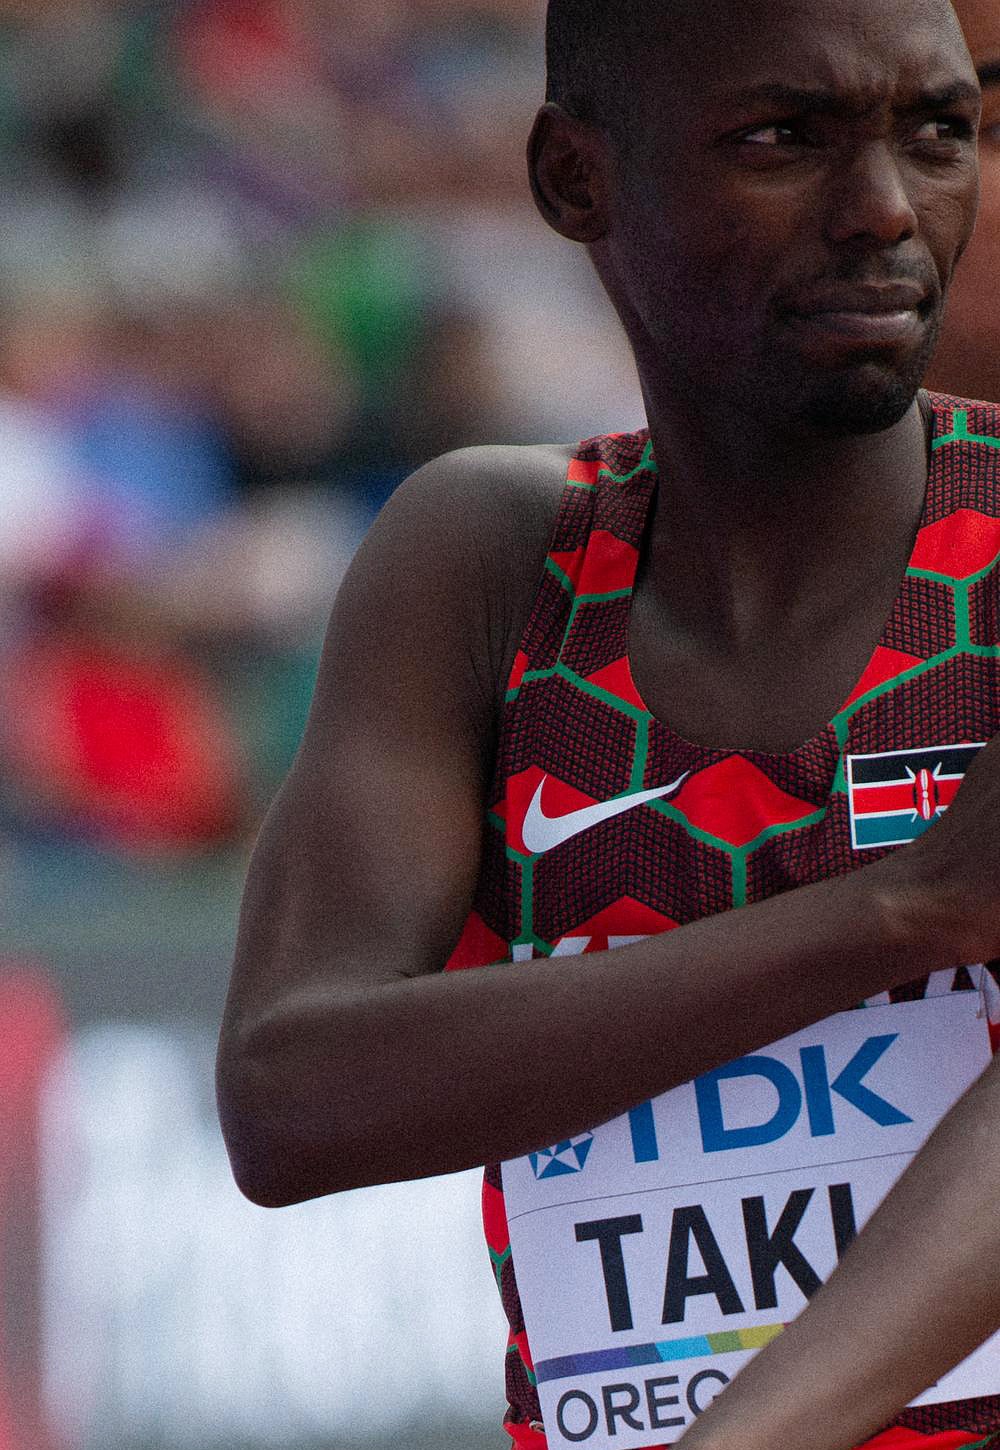 Photo of Kenyan track athlete Kumari Taki by Chloe Montague